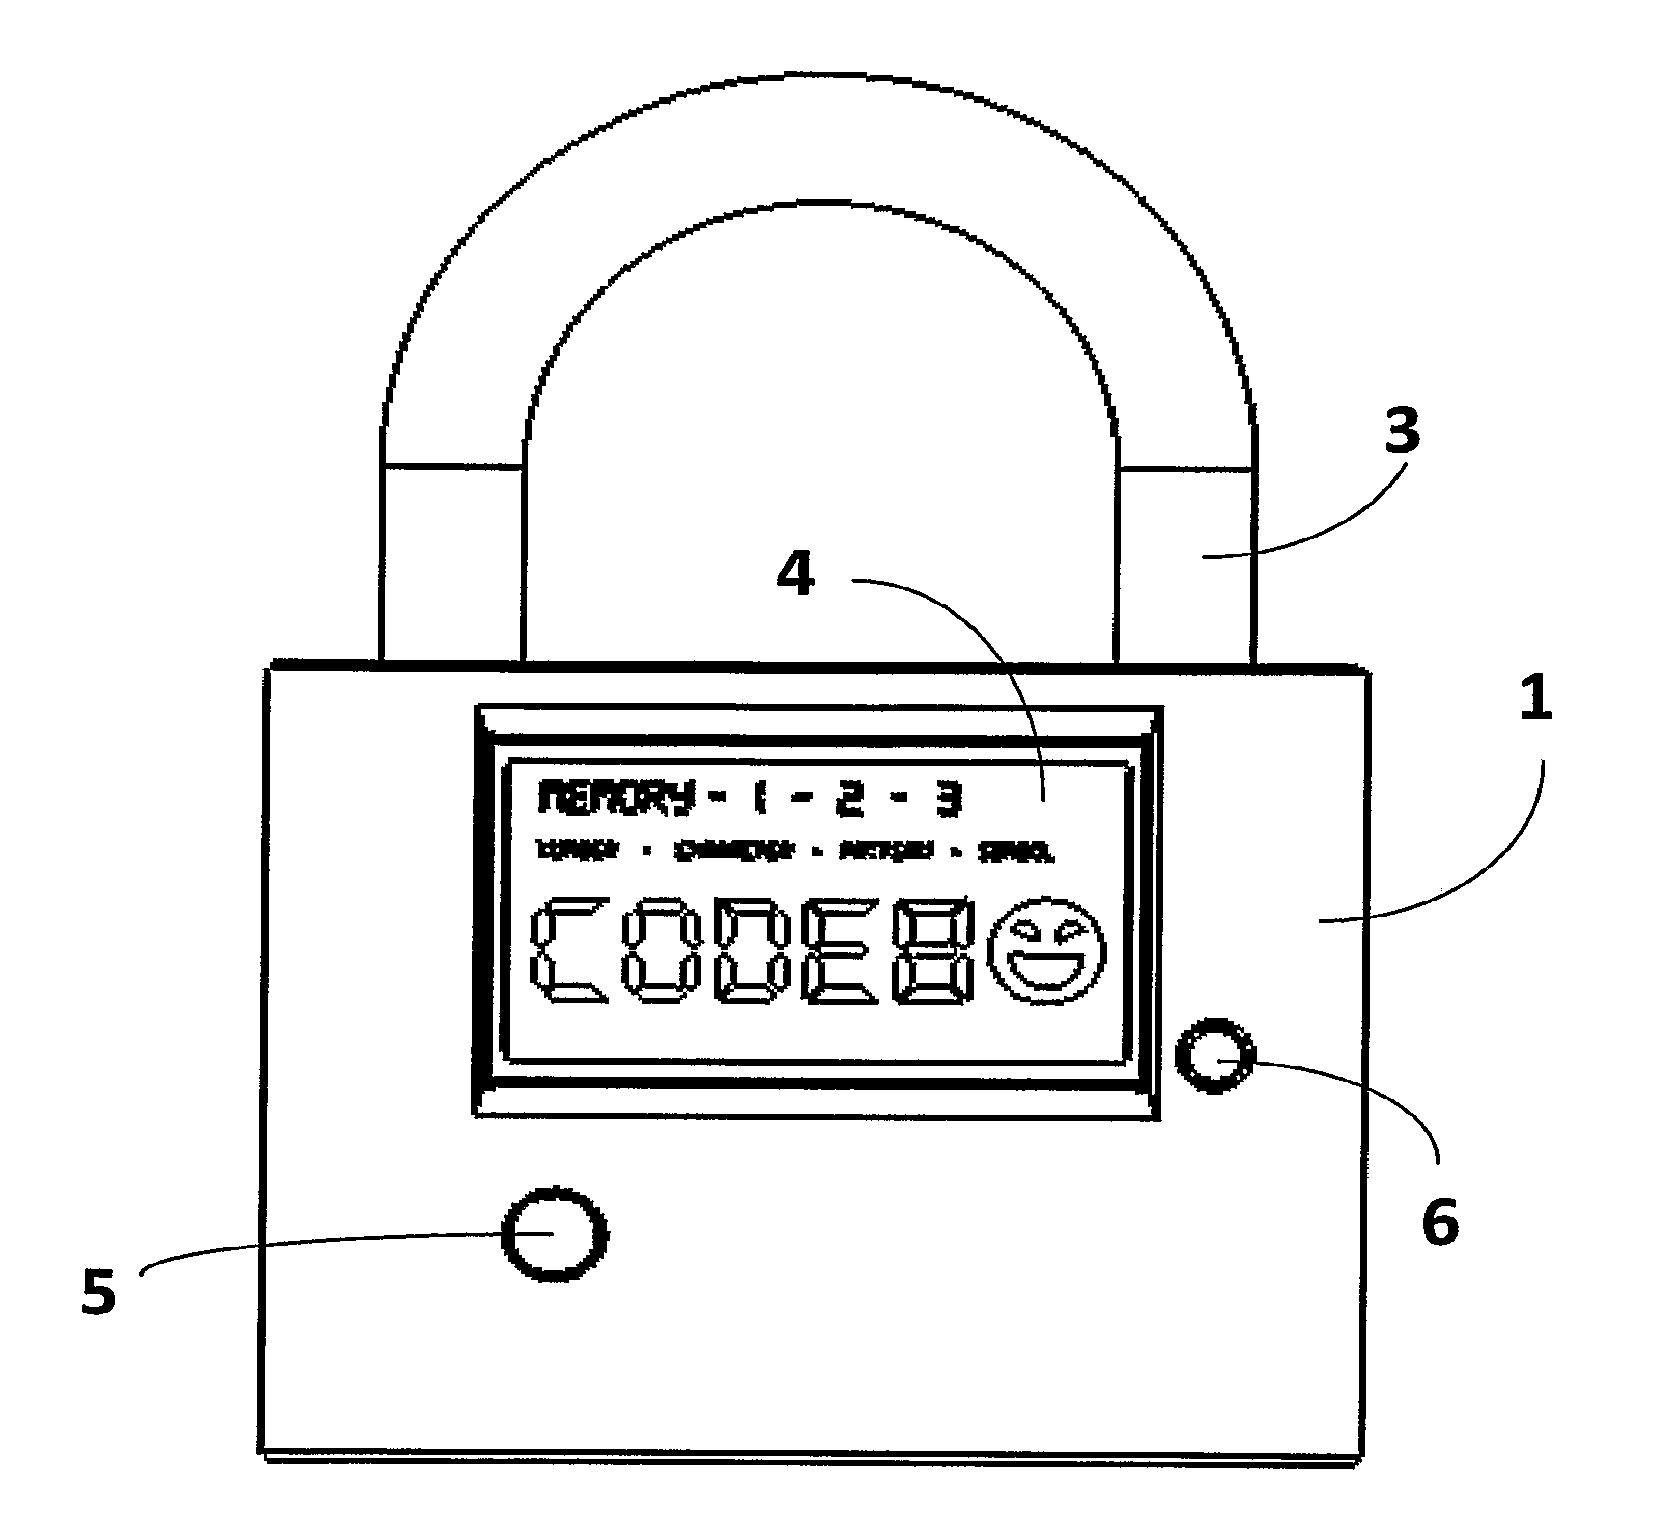 Electronic combination lock